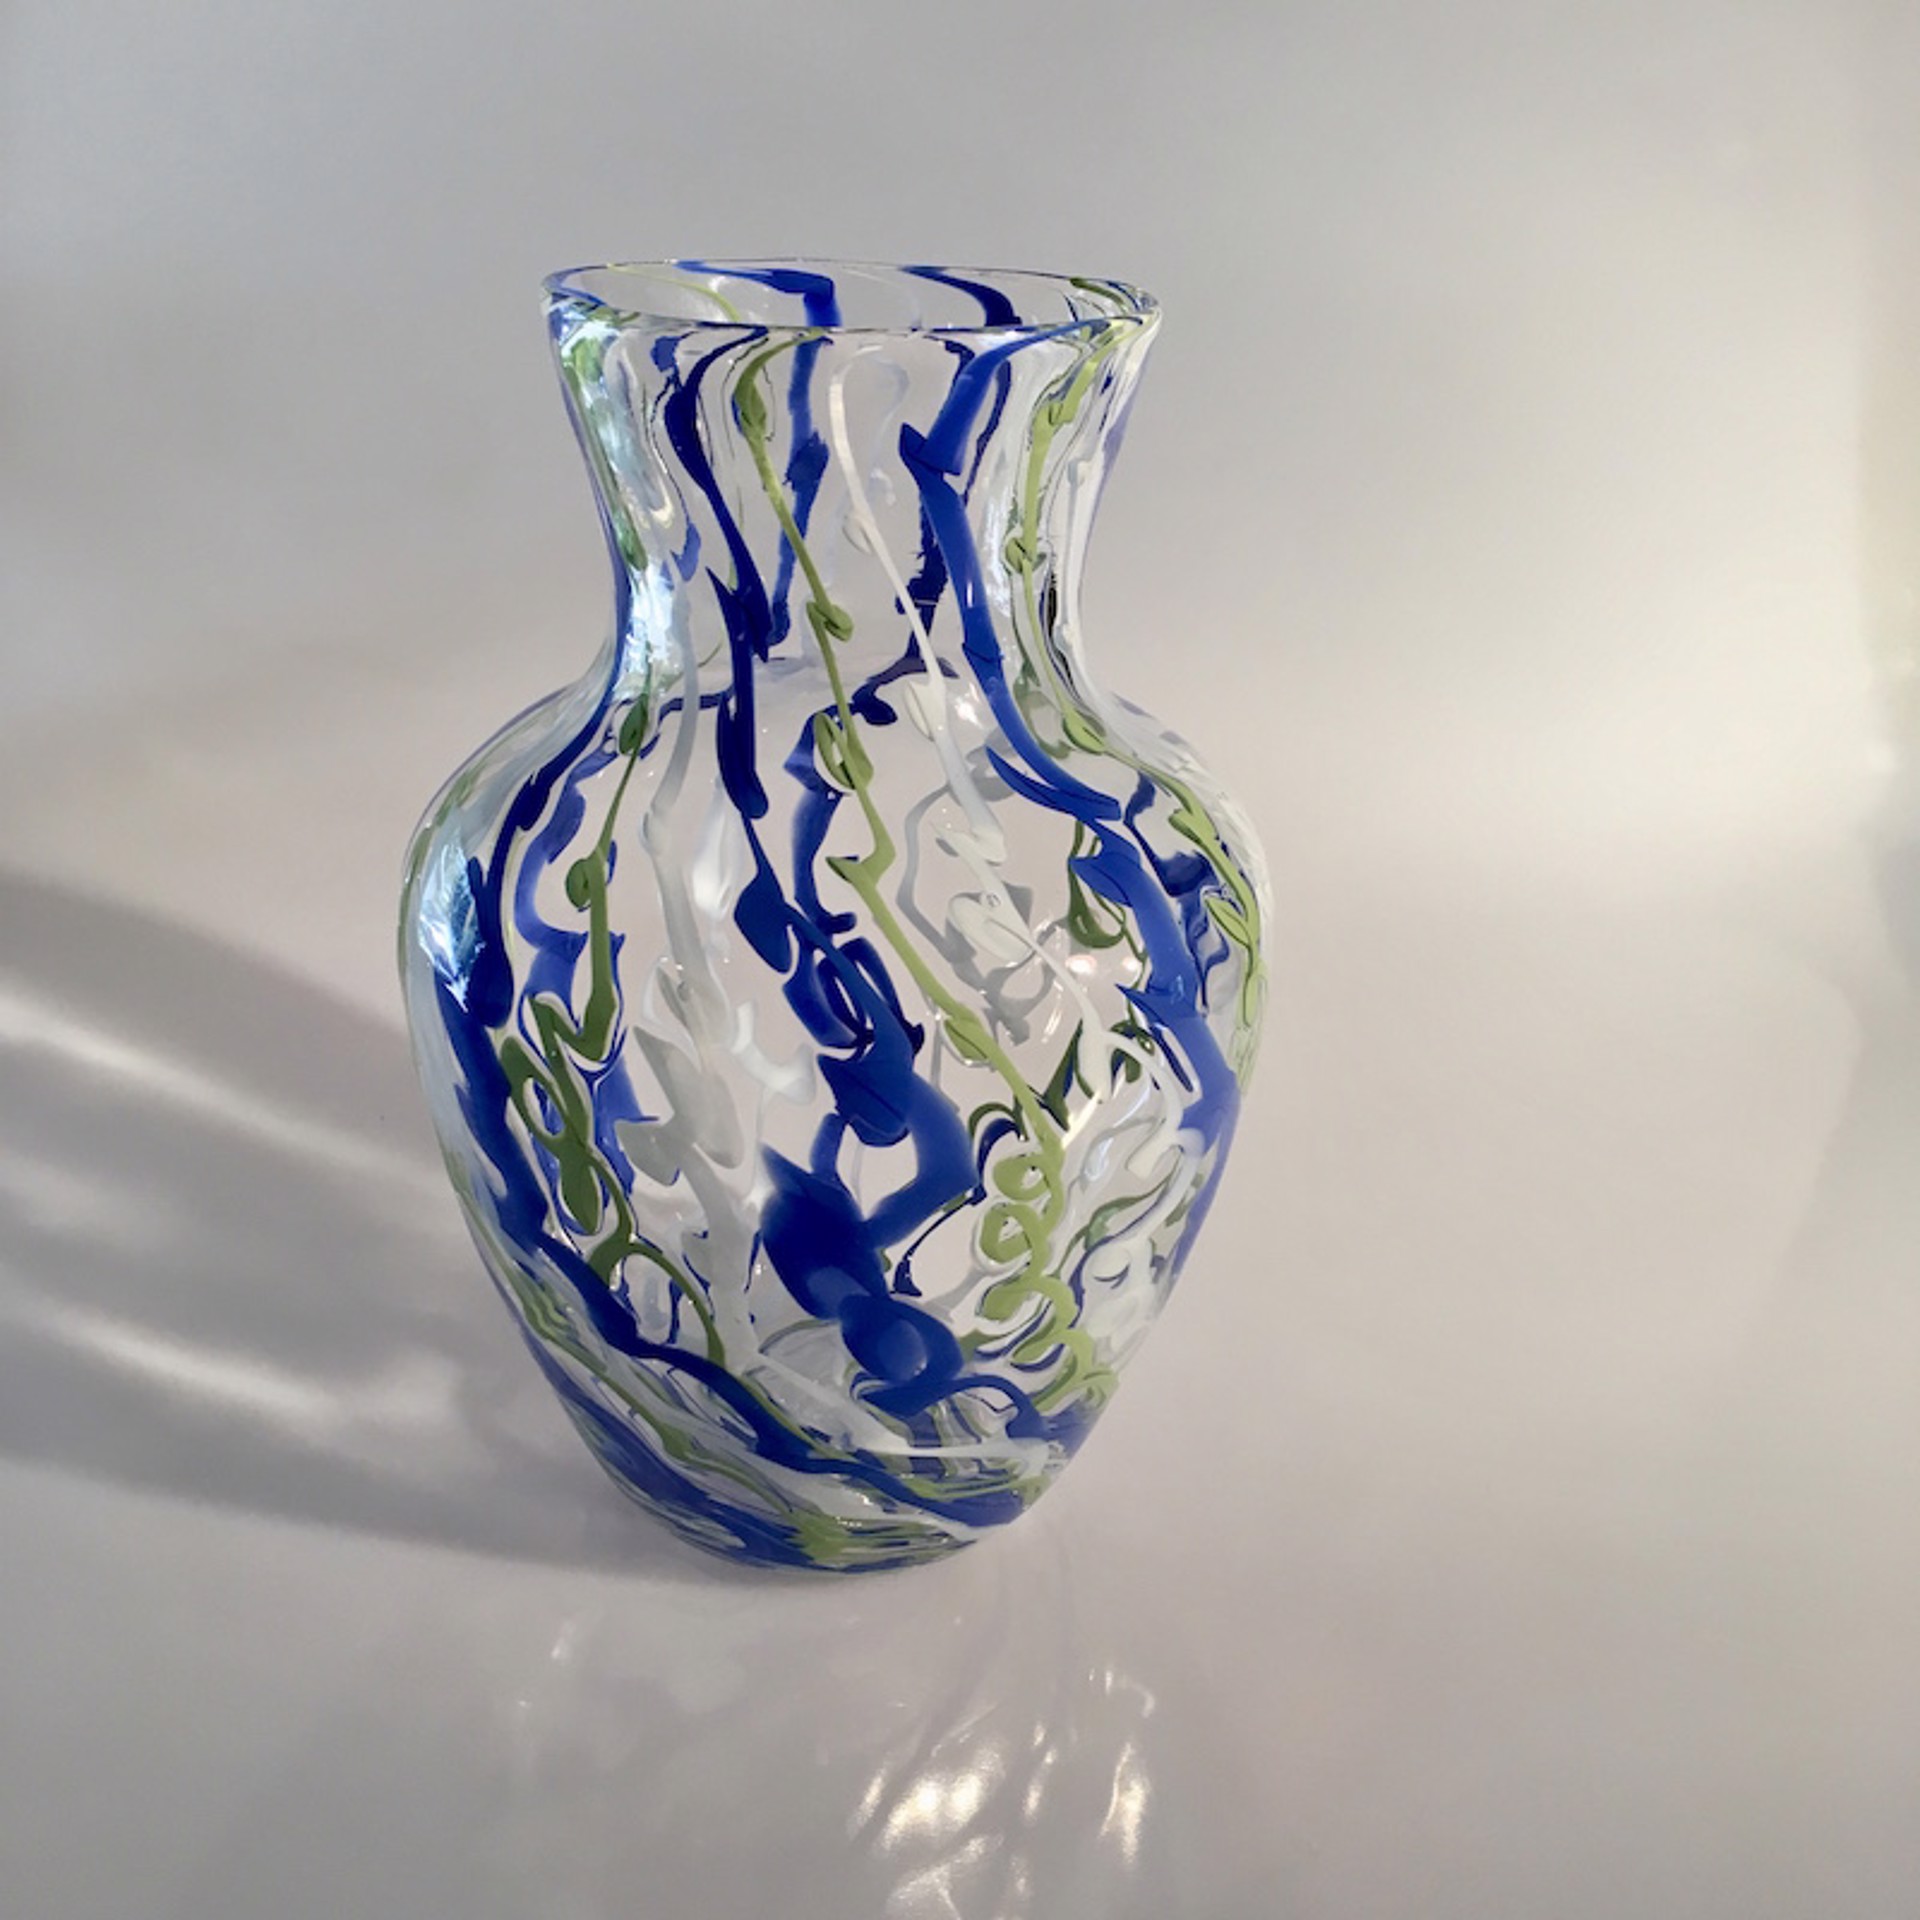 Cane Dancing Vase by Hayden MacRae